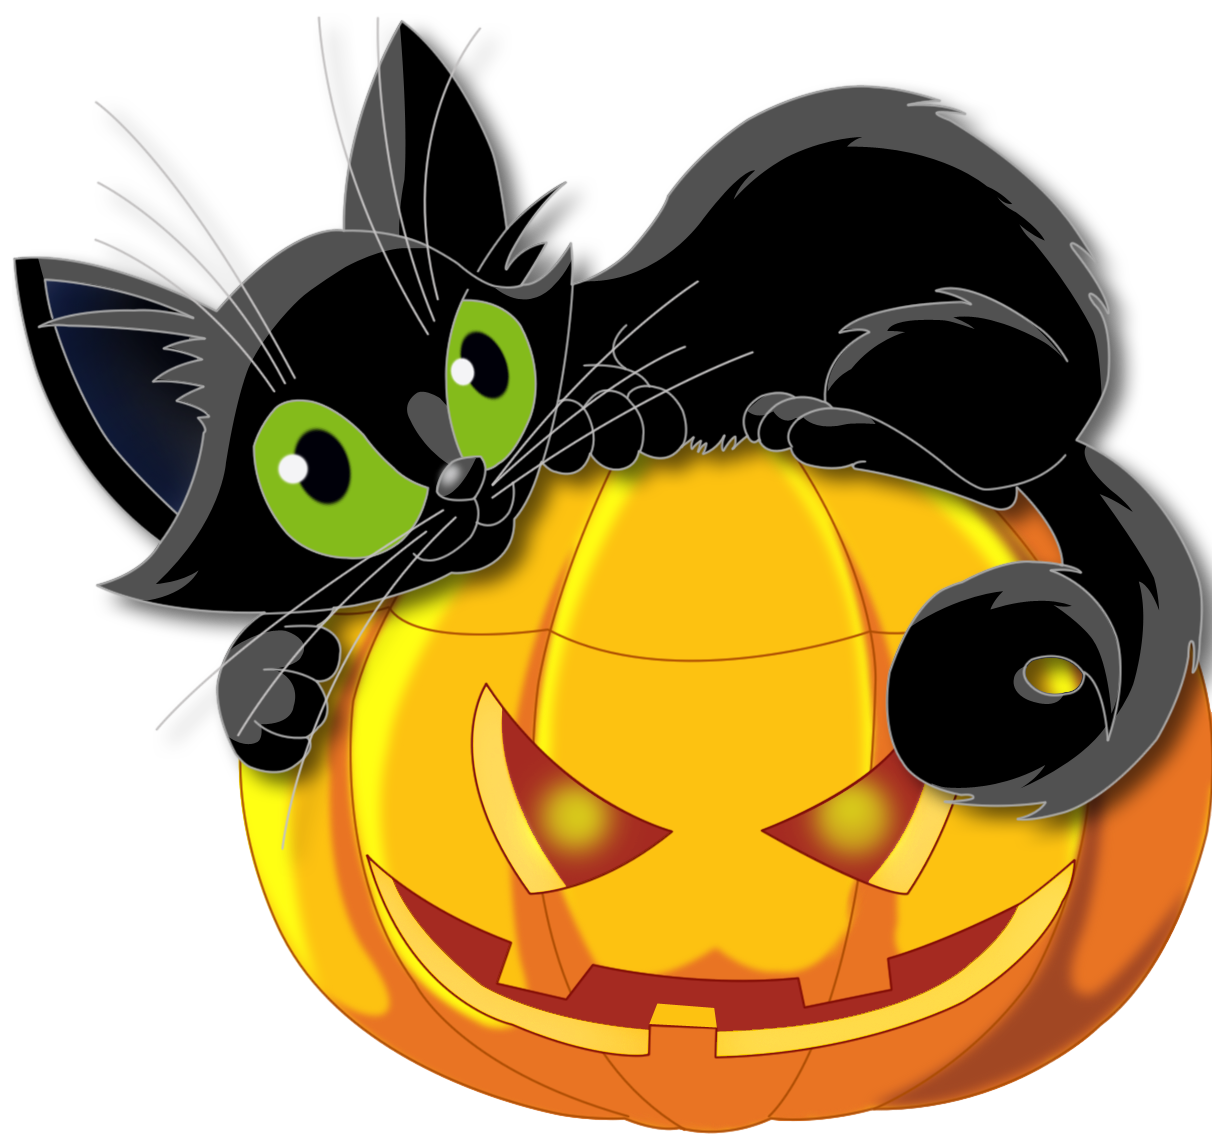 black cat clip art - Yahoo Im